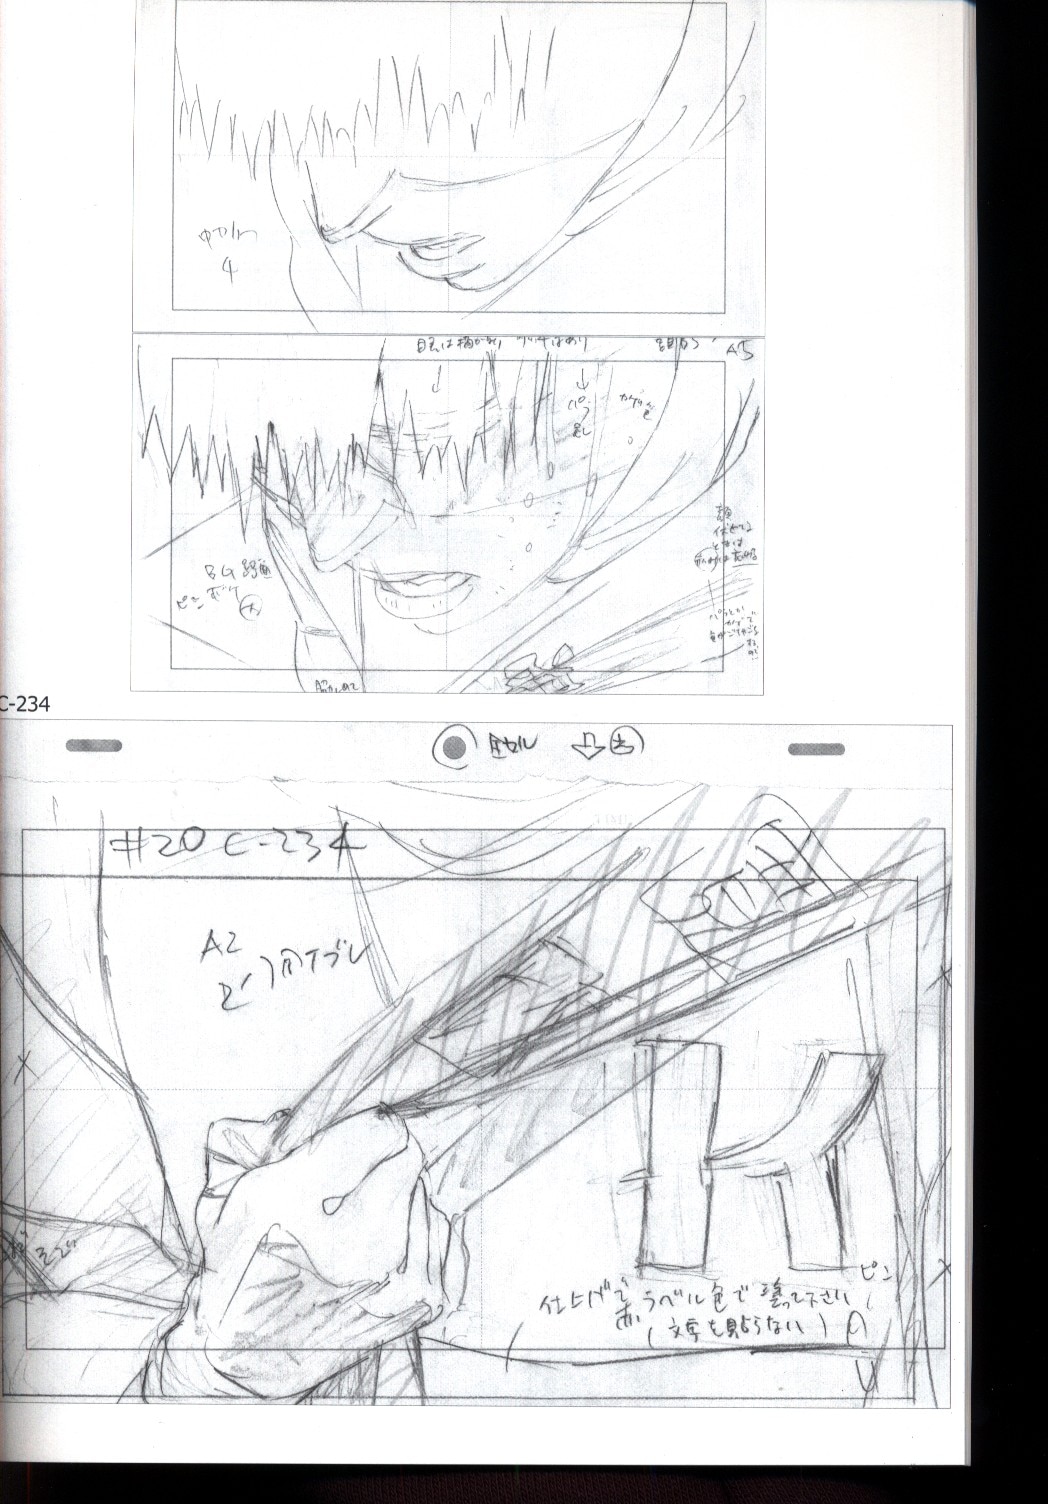 Pencil bunch (Takashi Mukoda) Takashi Mukoda original picture book 4  fort-issimo ※ book(s) damage